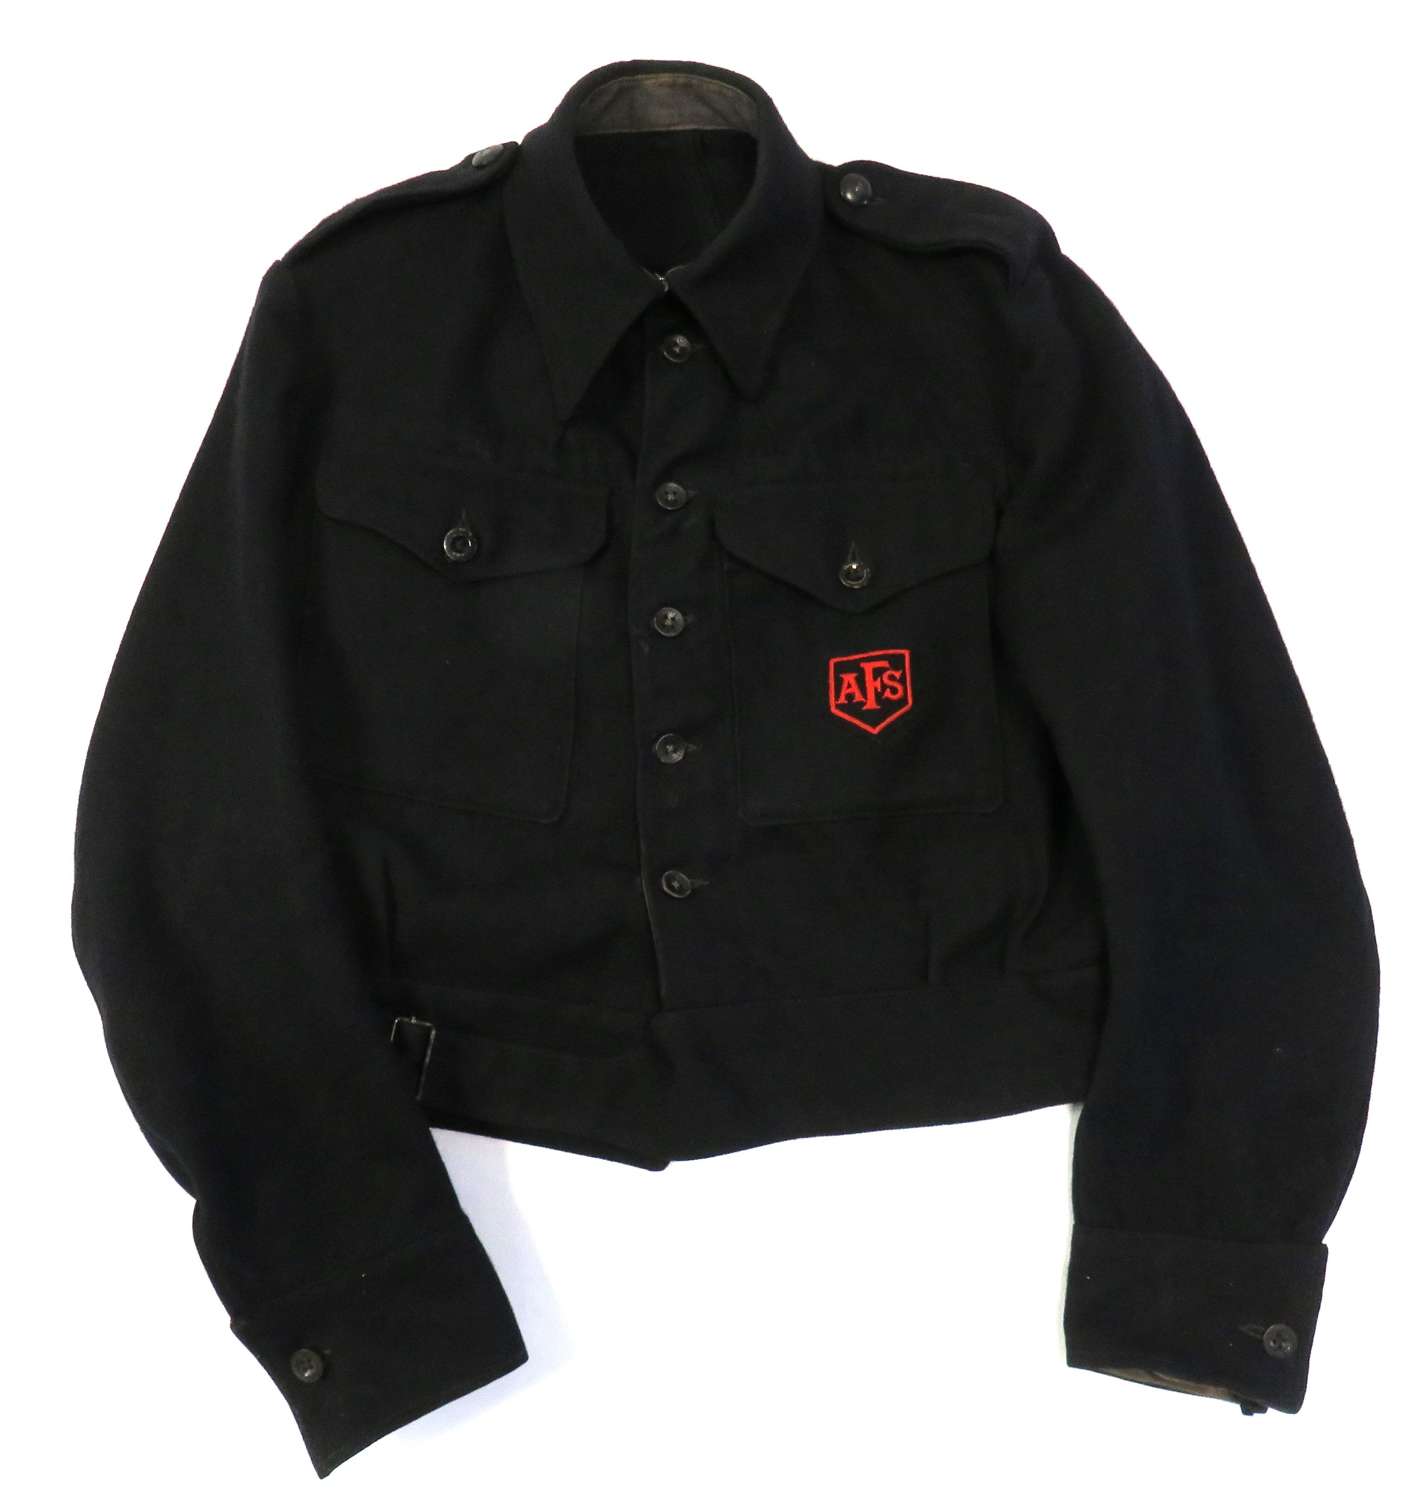 Post War N.F.S / A.F.S Battle Dress Jacket Dated 1947